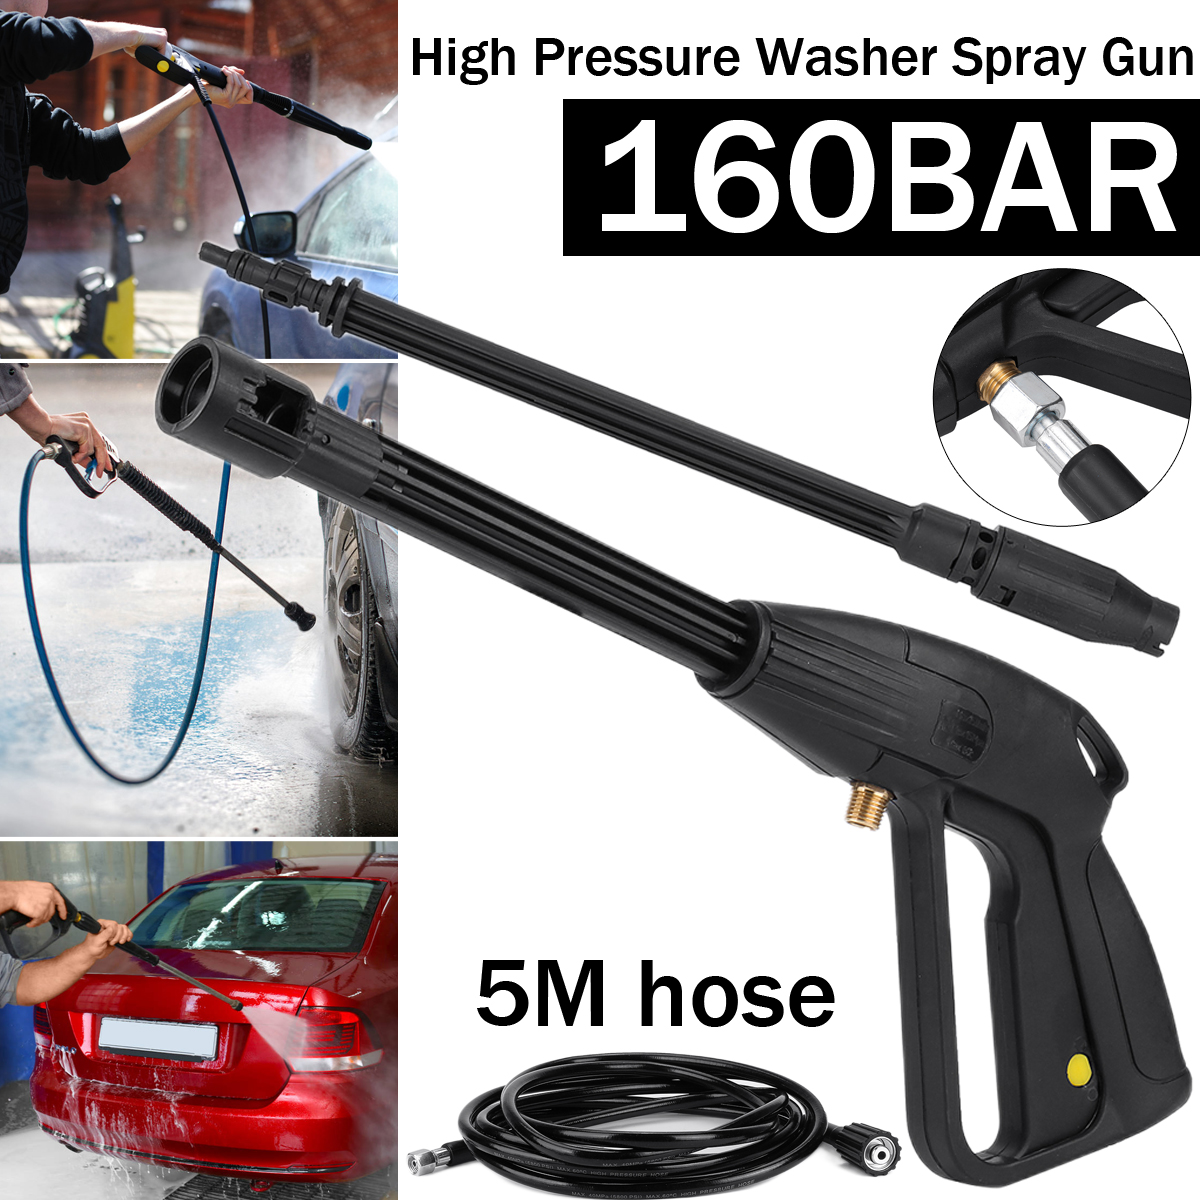 160 bar High Pressure Washer Spray Gun For Car Jet Washing Kit Hose W/5M A5G6 